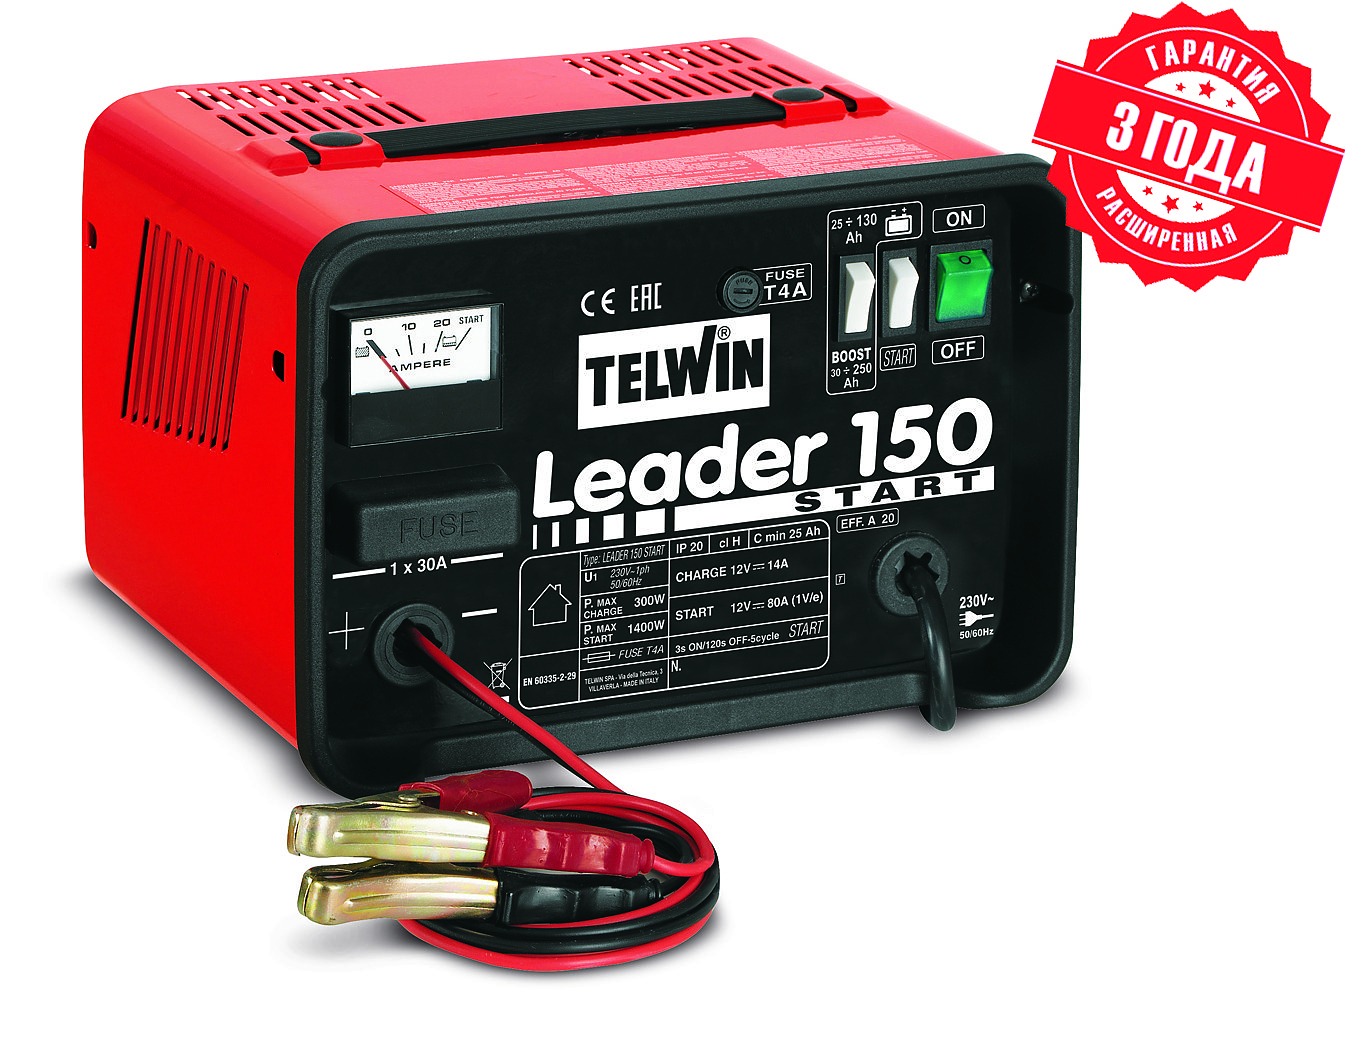 Пуско-зарядное устройство LEADER 150 START 230V Telwin(Италия)